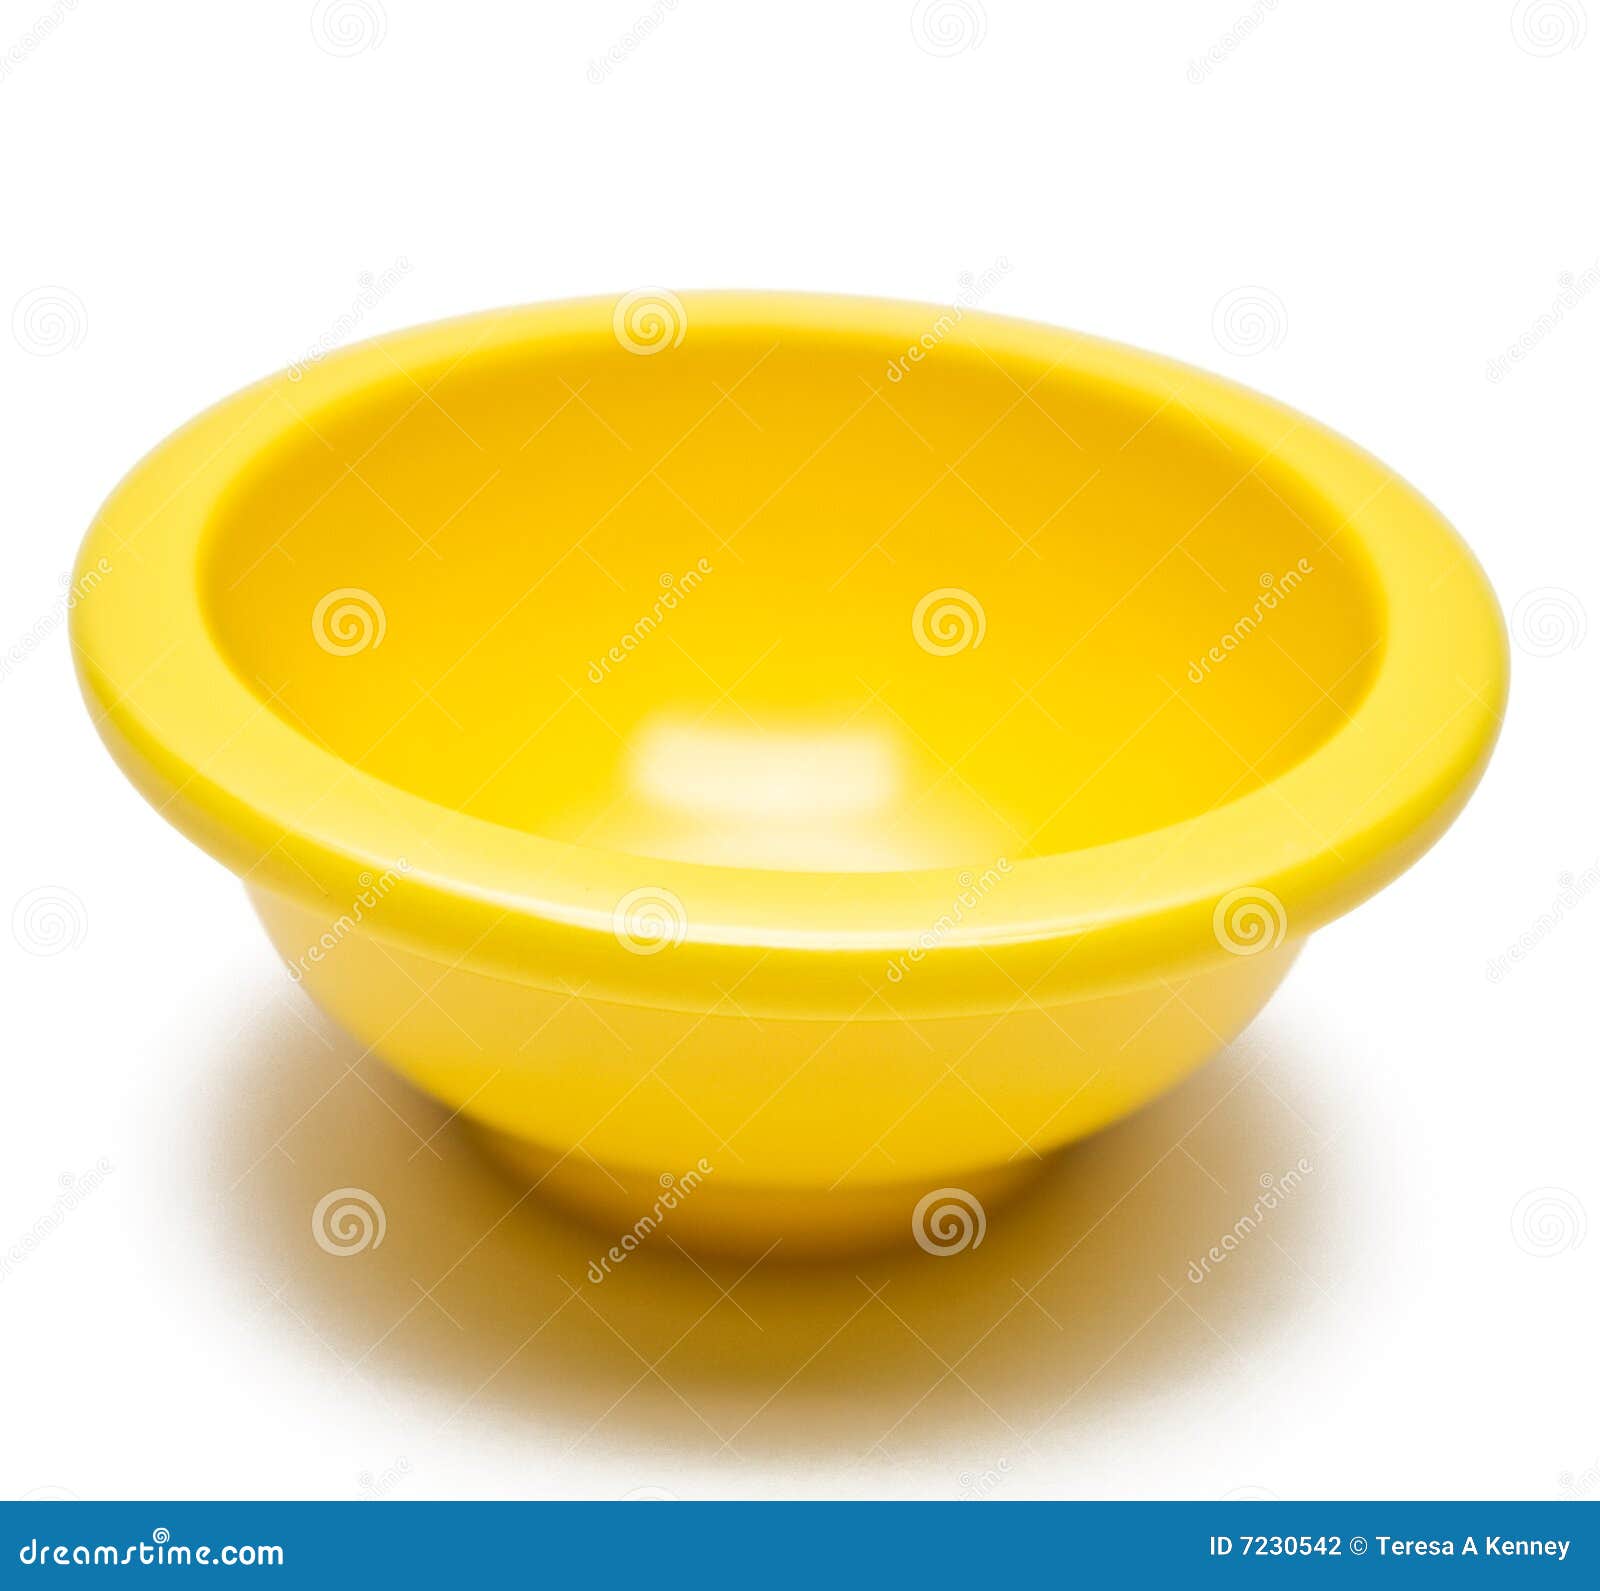 yellow pinch bowl